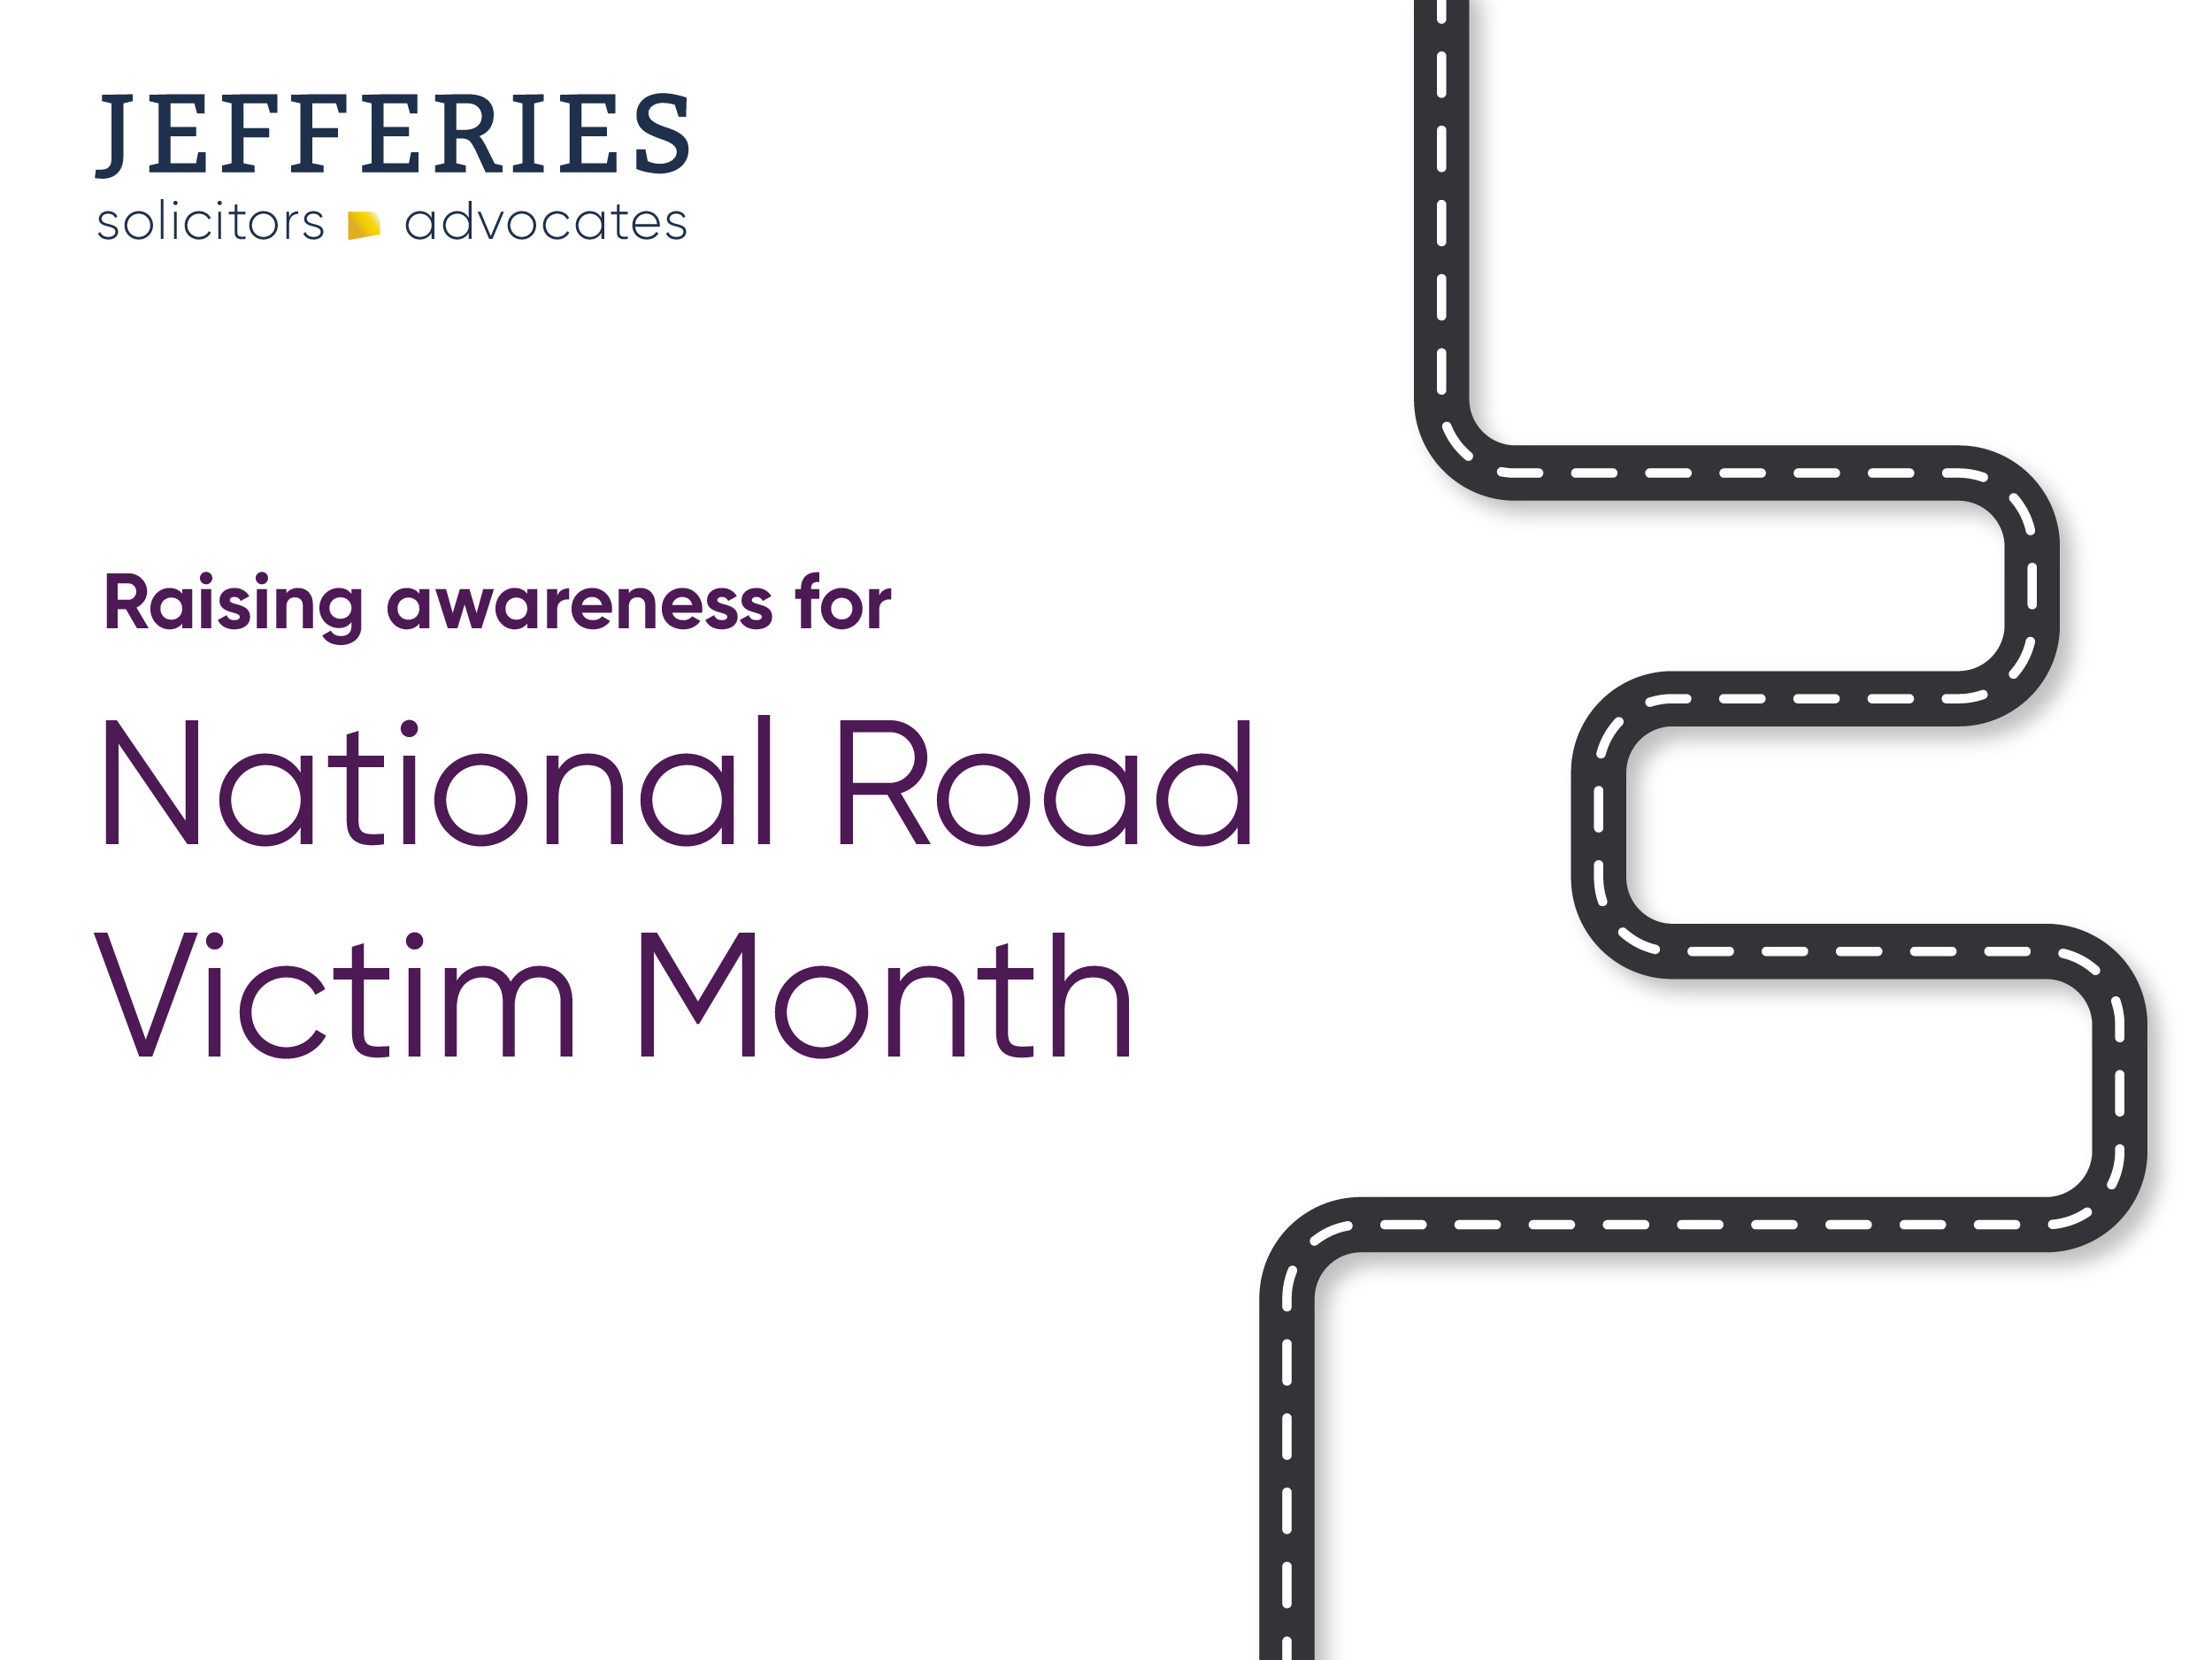 National Road Victim Month